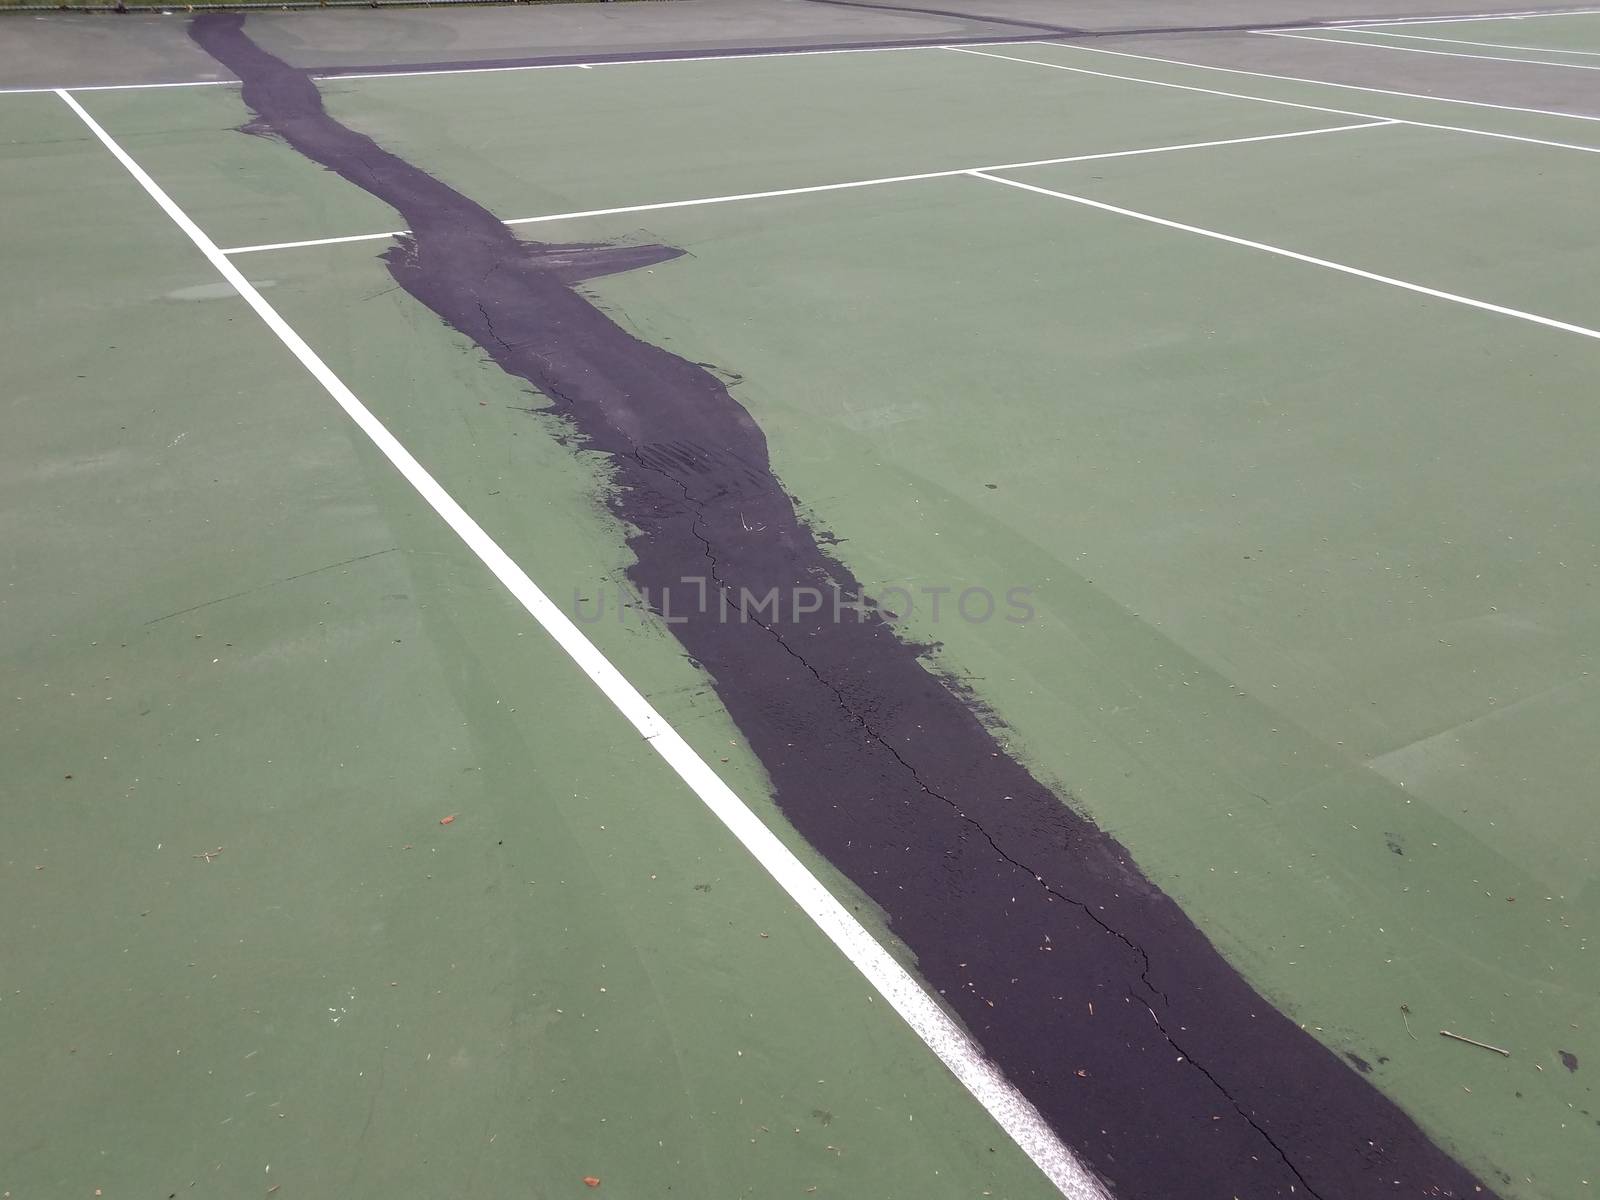 black tar to repair cracks on green tennis court by stockphotofan1